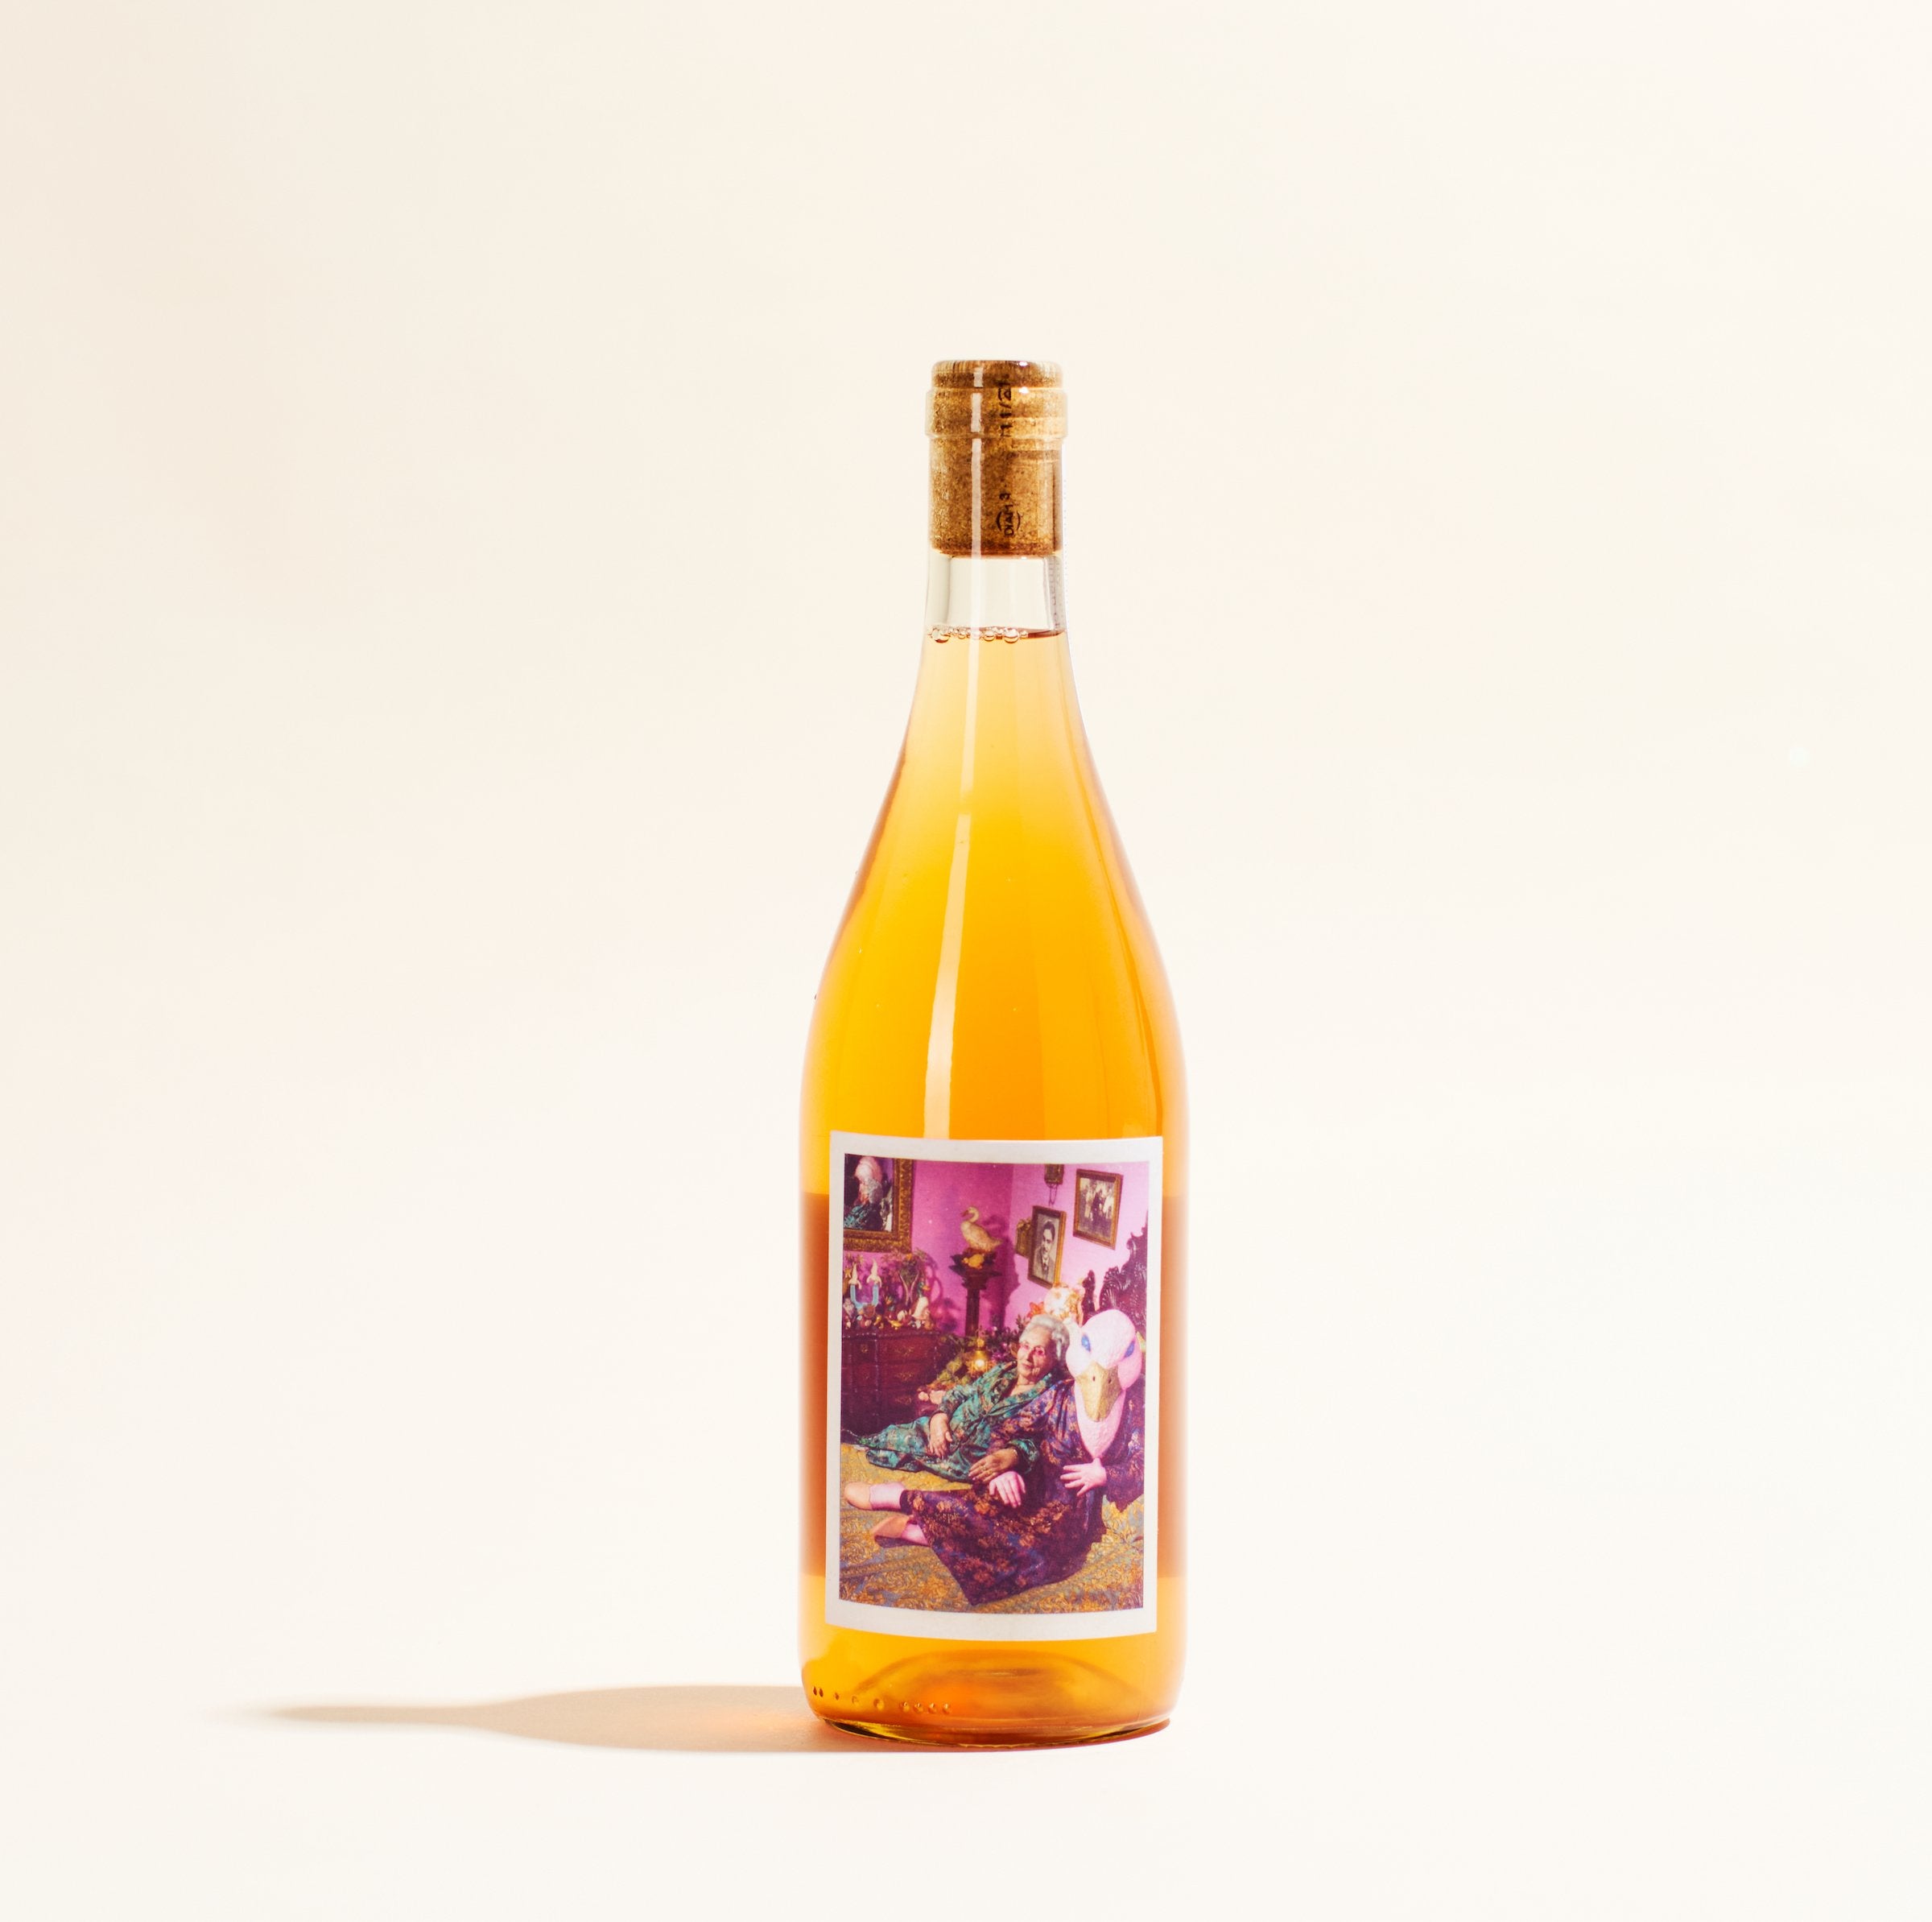 kite duck duckman bairrada portugal natural rose wine bottle